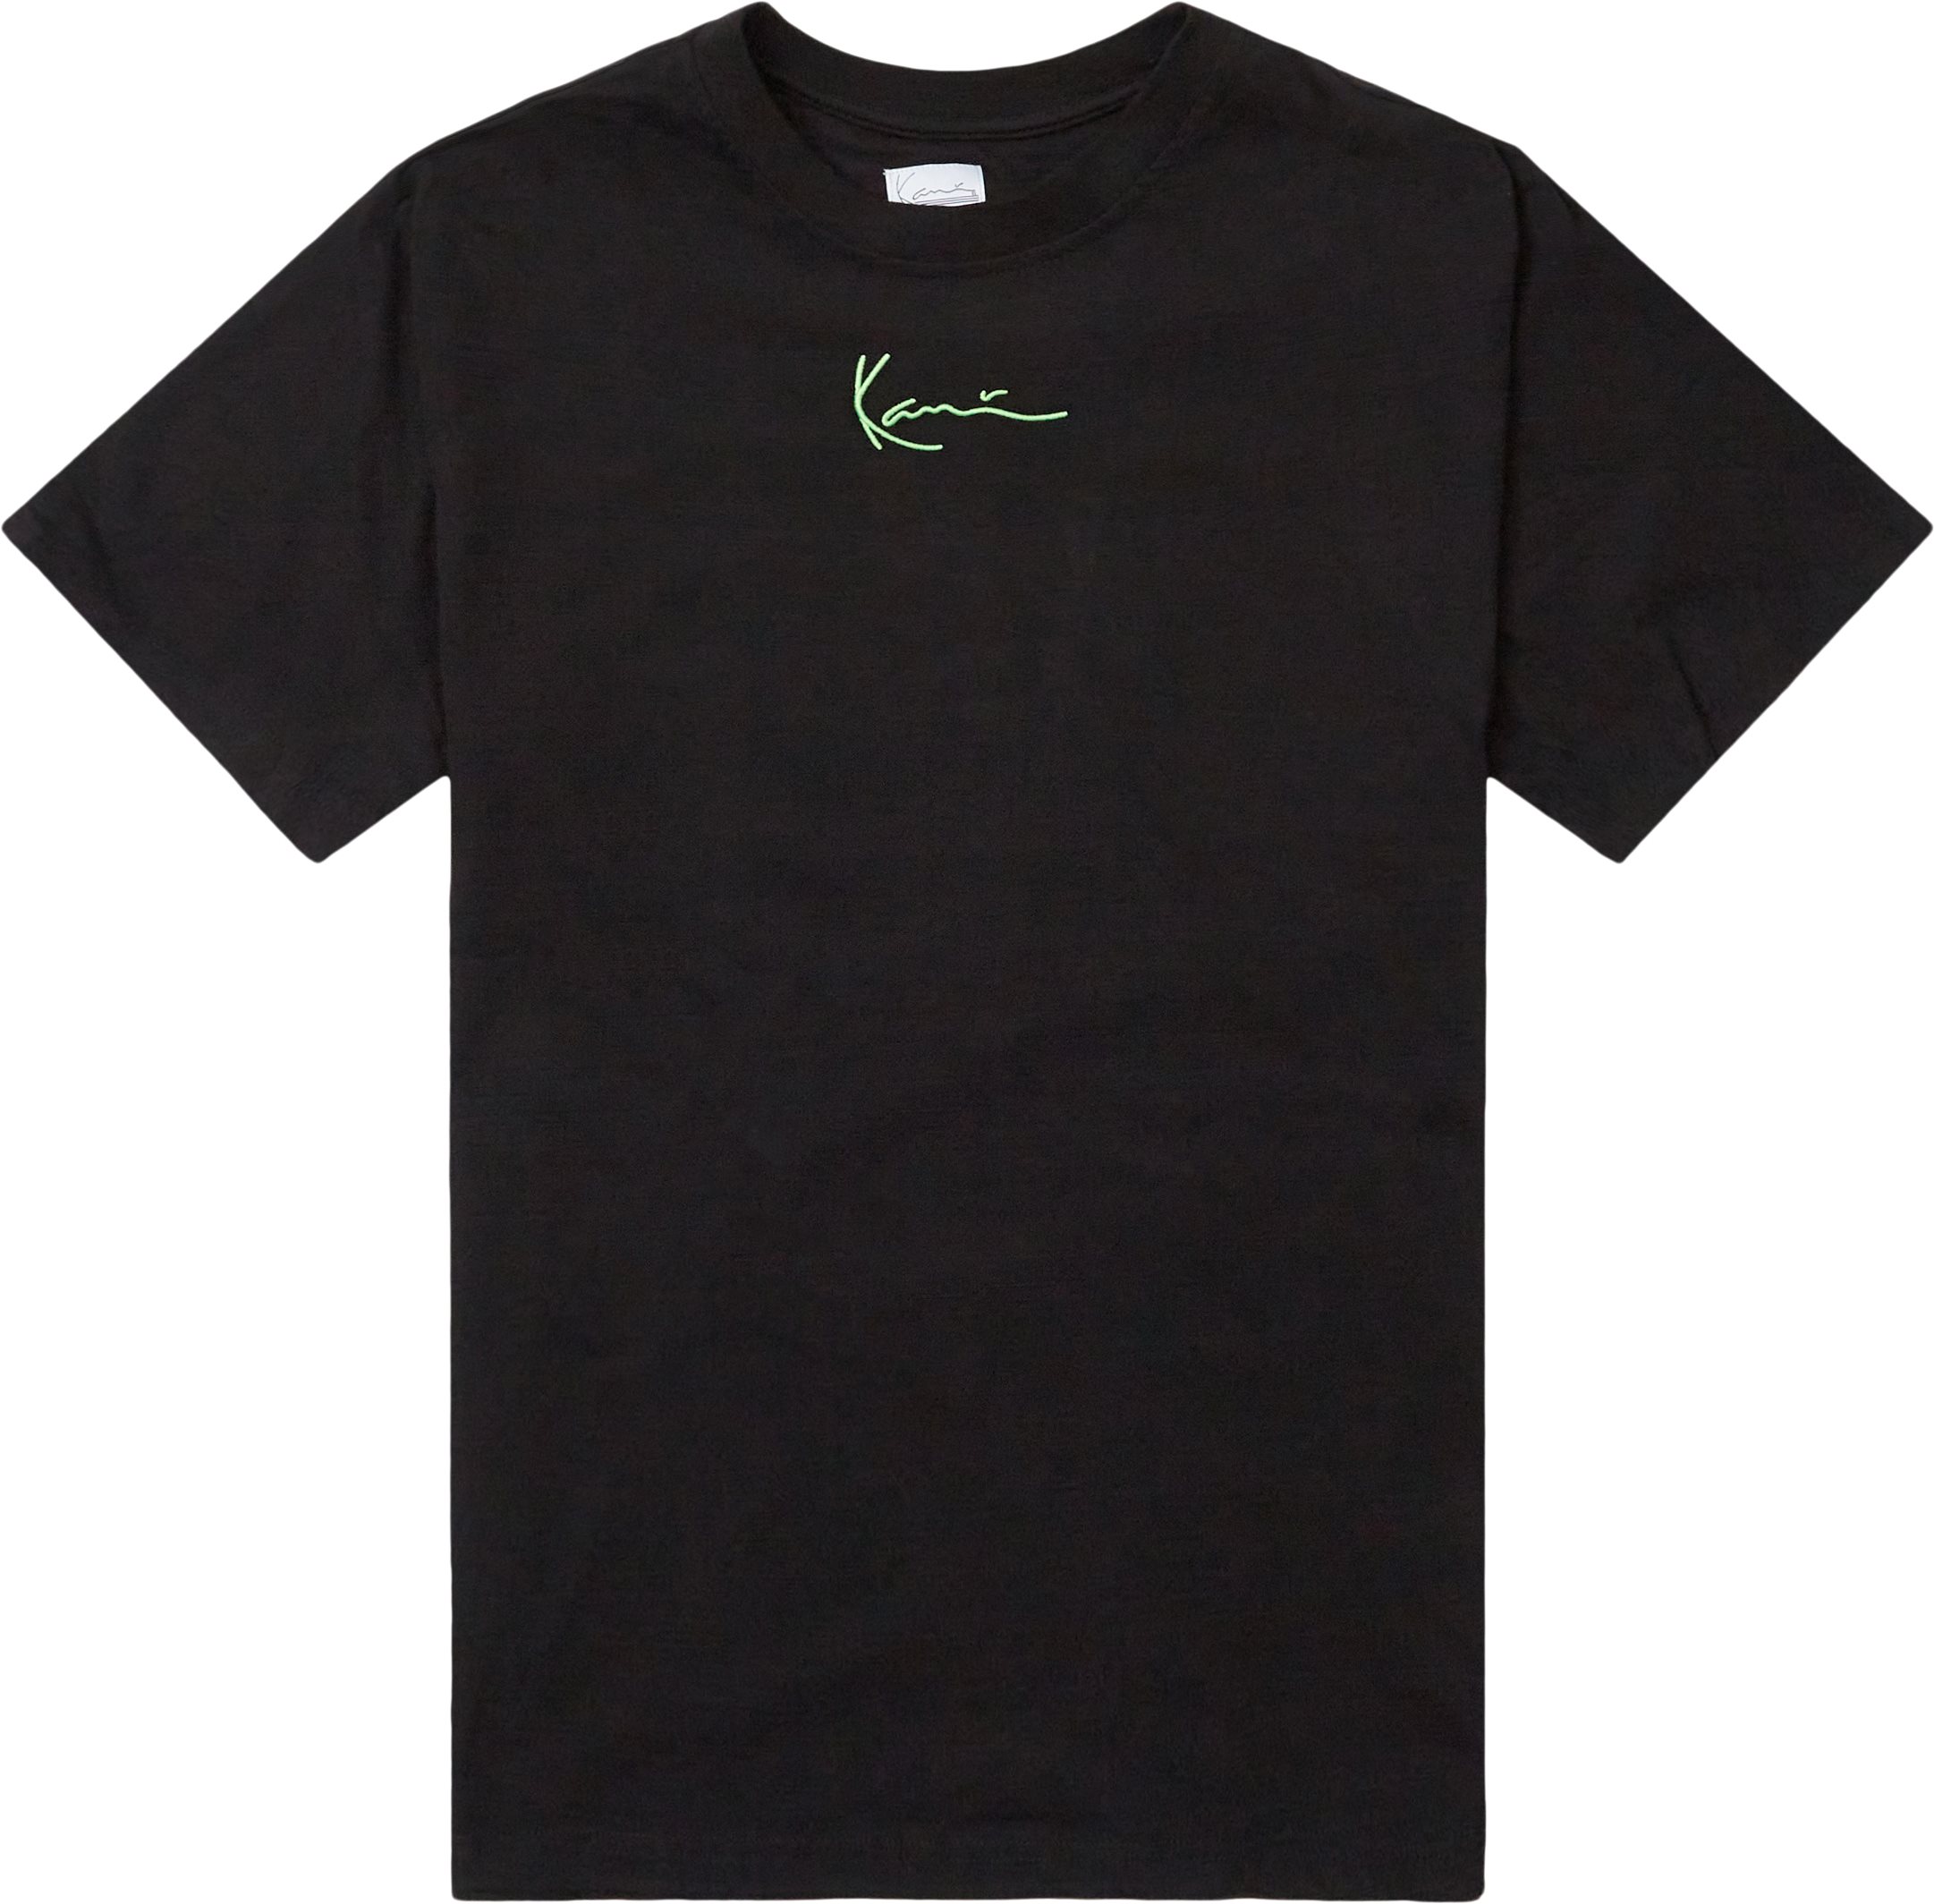 Small Signature Print Tee - T-shirts - Regular fit - Black